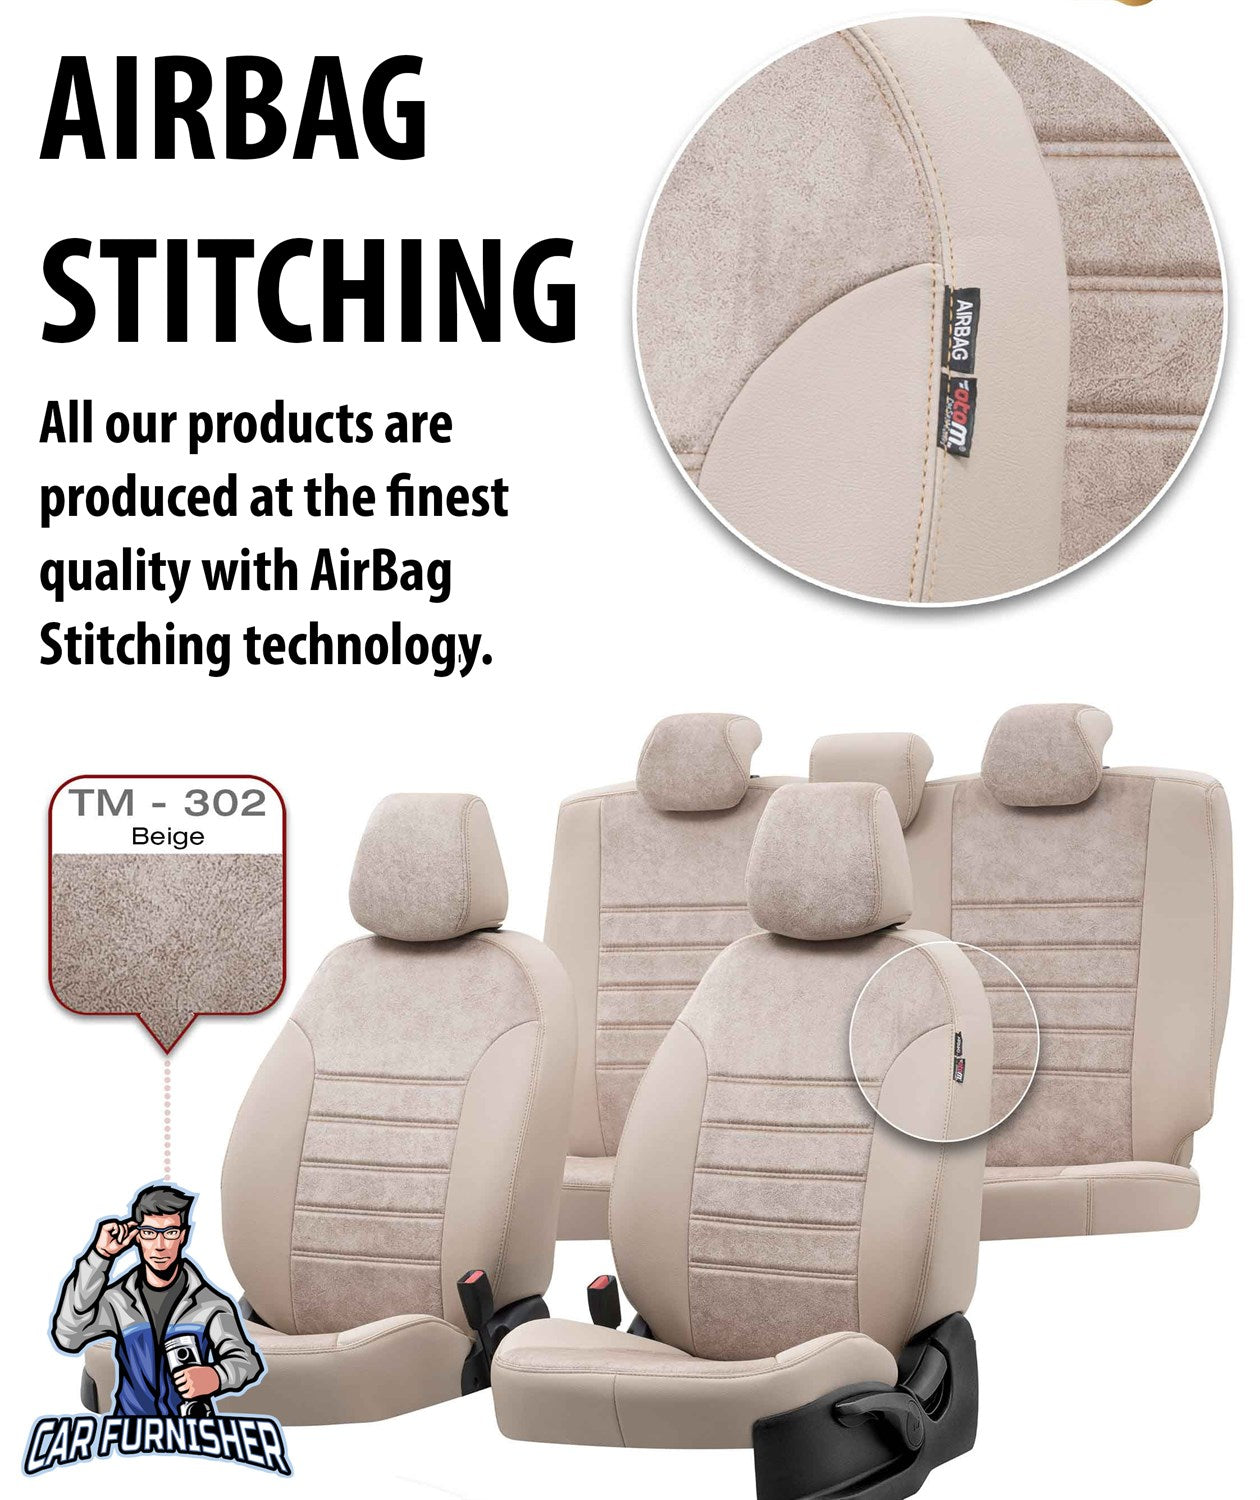 Daihatsu Materia Seat Covers Milano Suede Design Ivory Leather & Suede Fabric